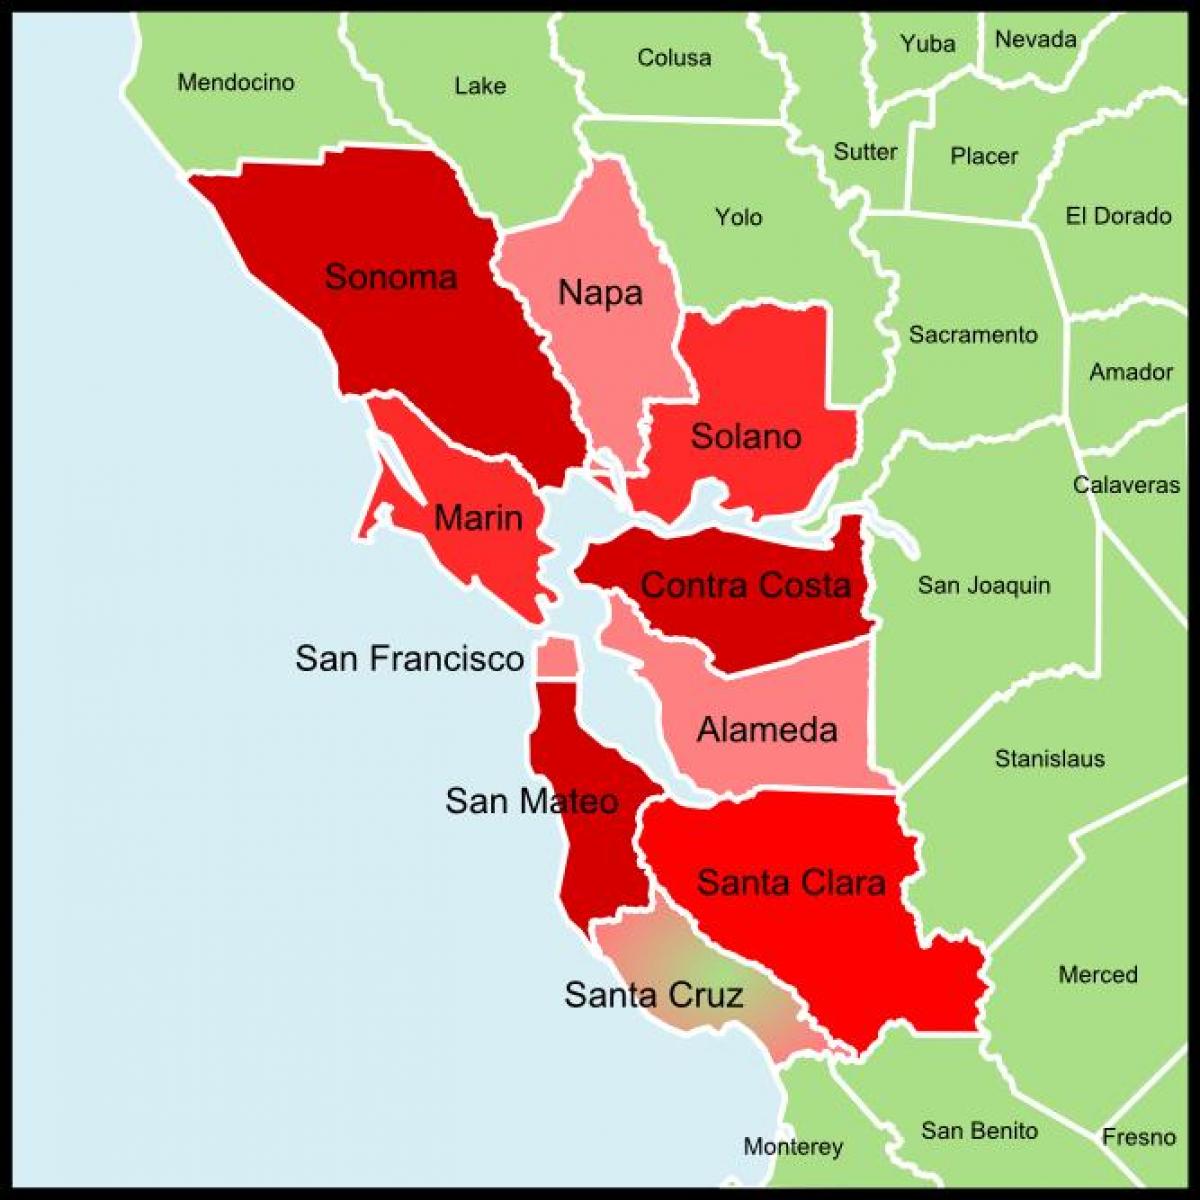 Сан Франциско заливот област област на мапата